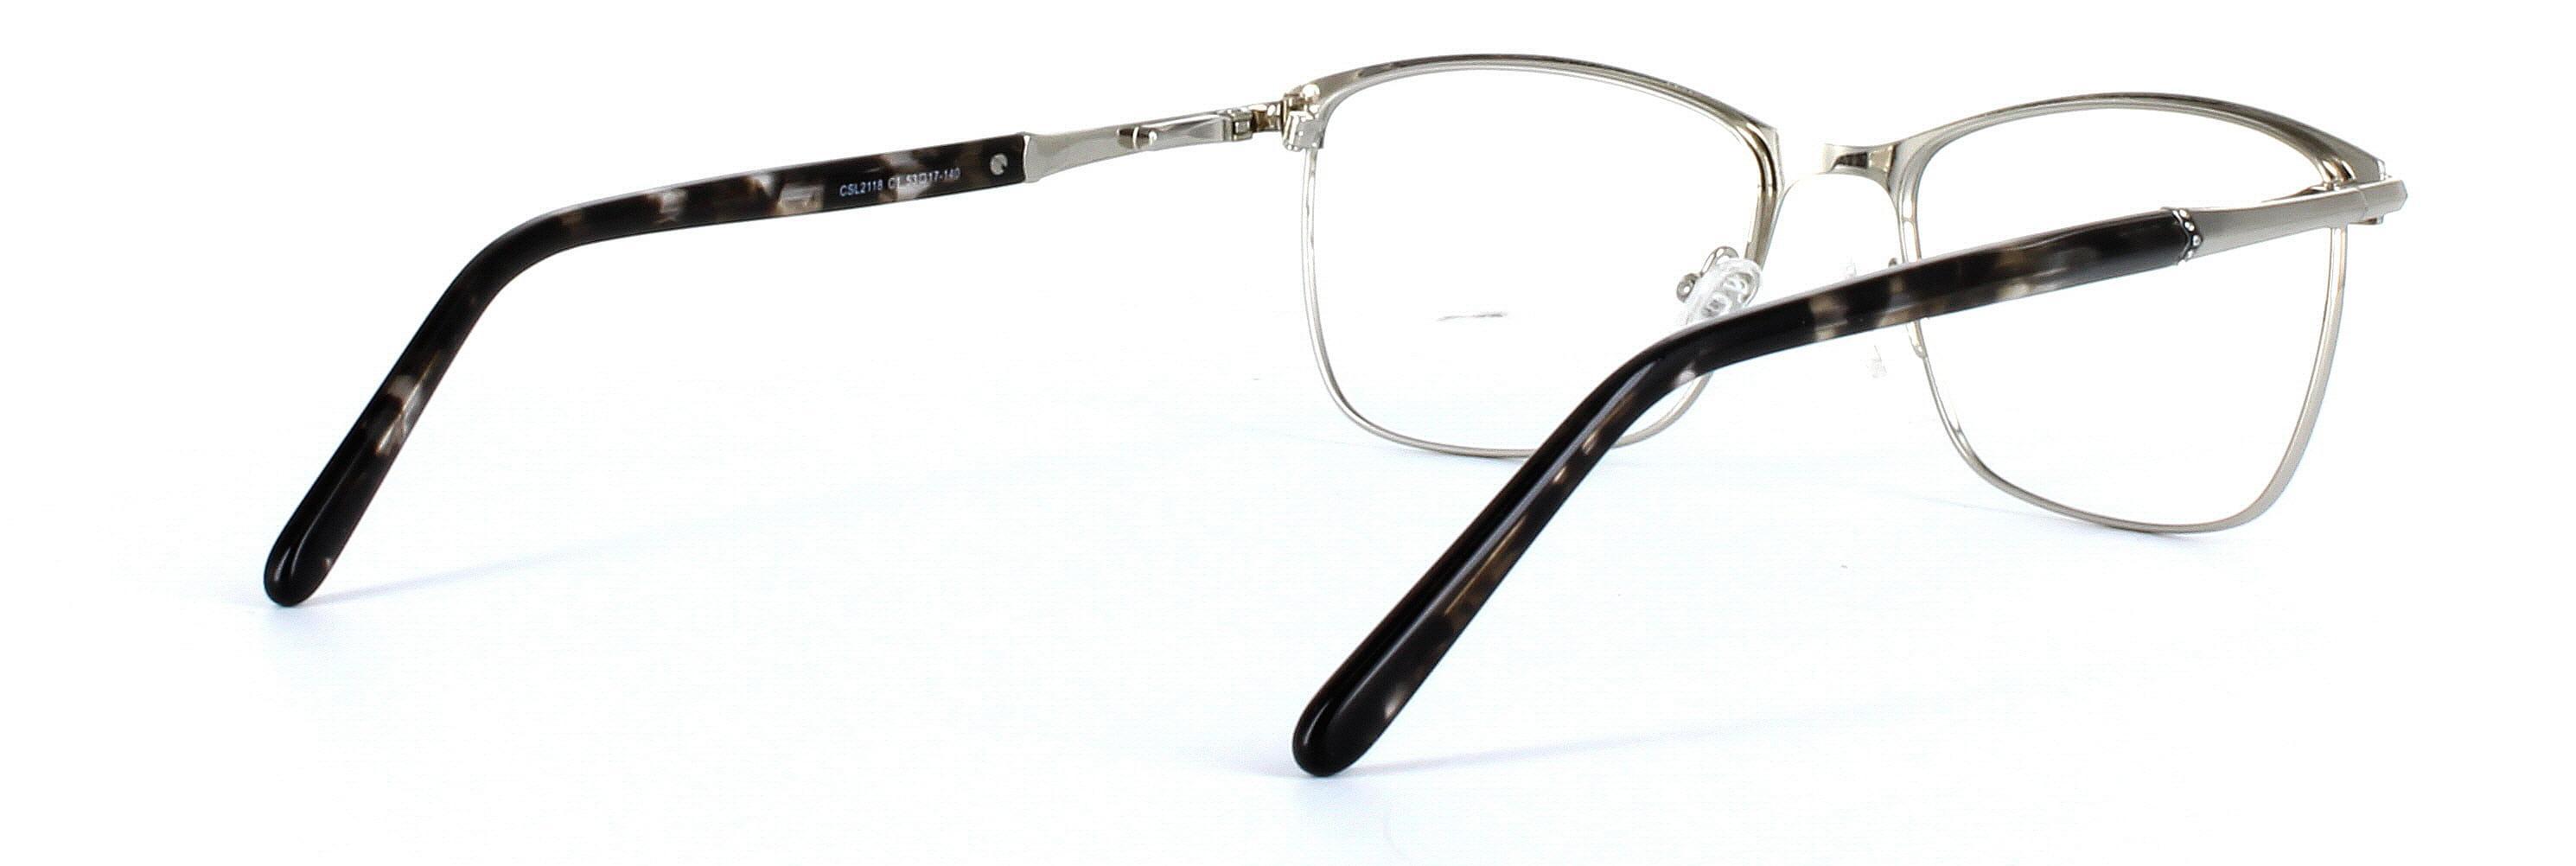 Pheobie Black and Silver Full Rim Oval Metal Glasses - Image View 4